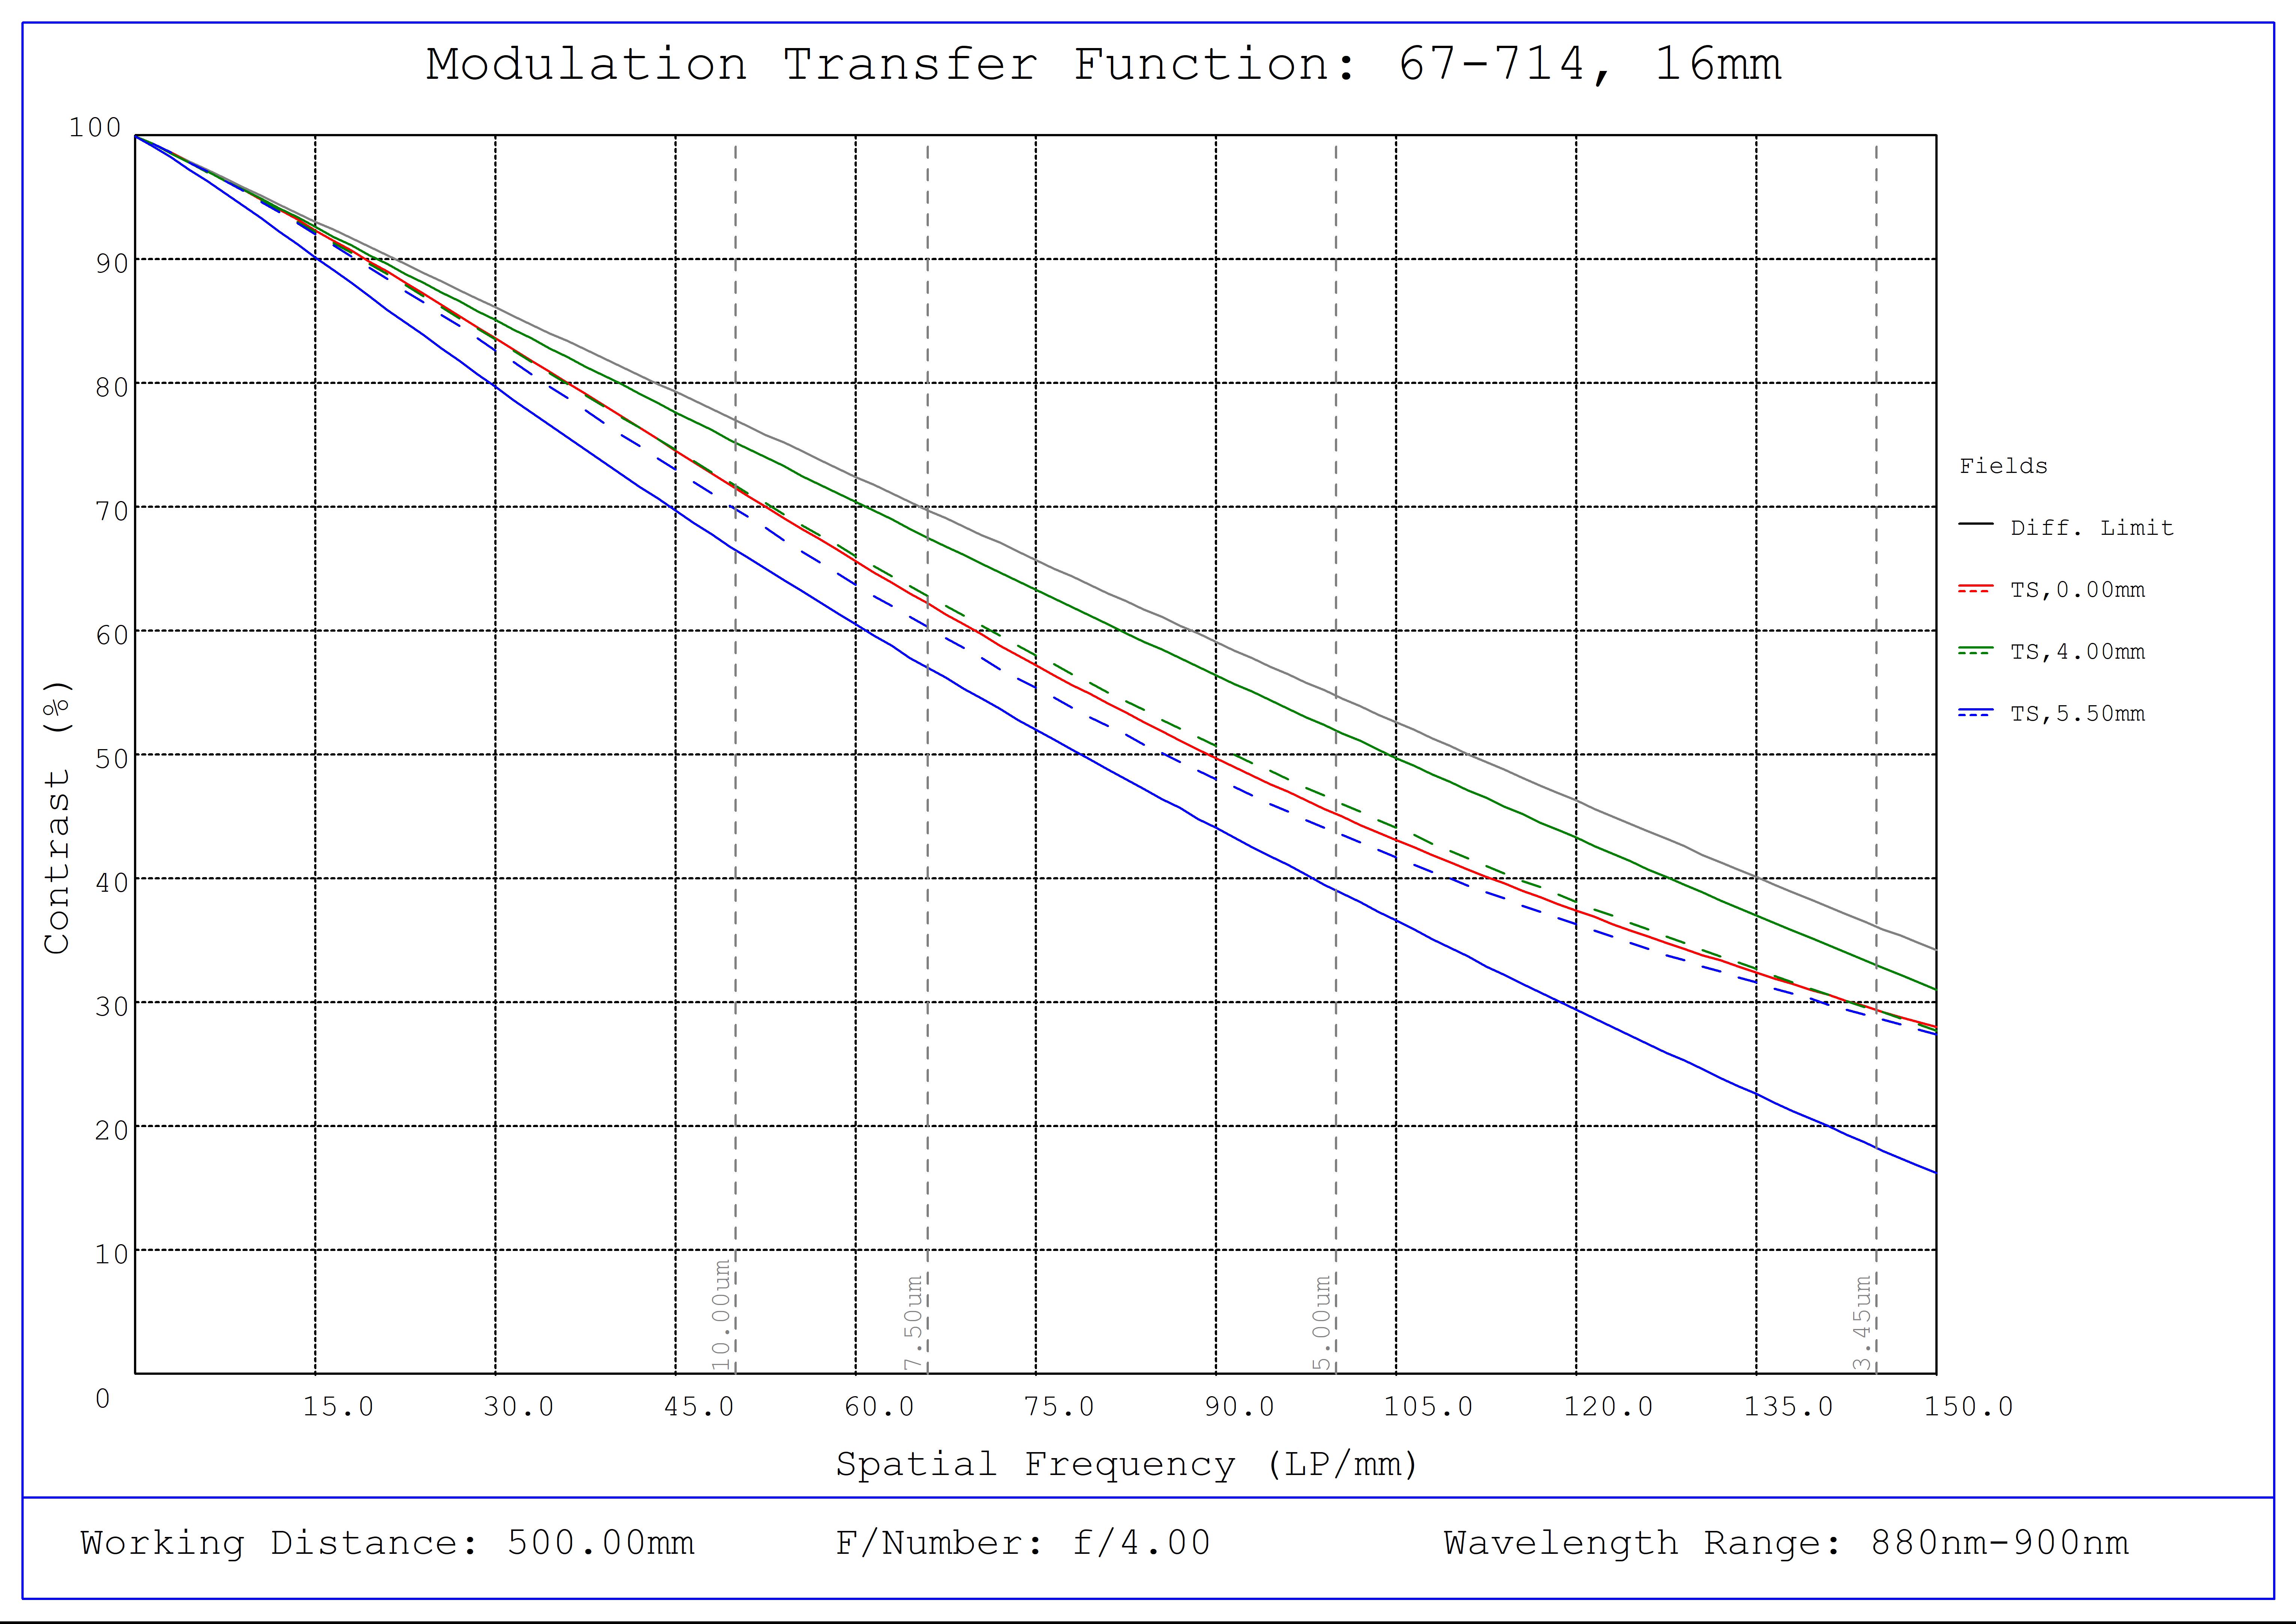 #67-714, 16mm C VIS-NIR Series Fixed Focal Length Lens, Modulated Transfer Function (MTF) Plot (NIR), 500mm Working Distance, f4